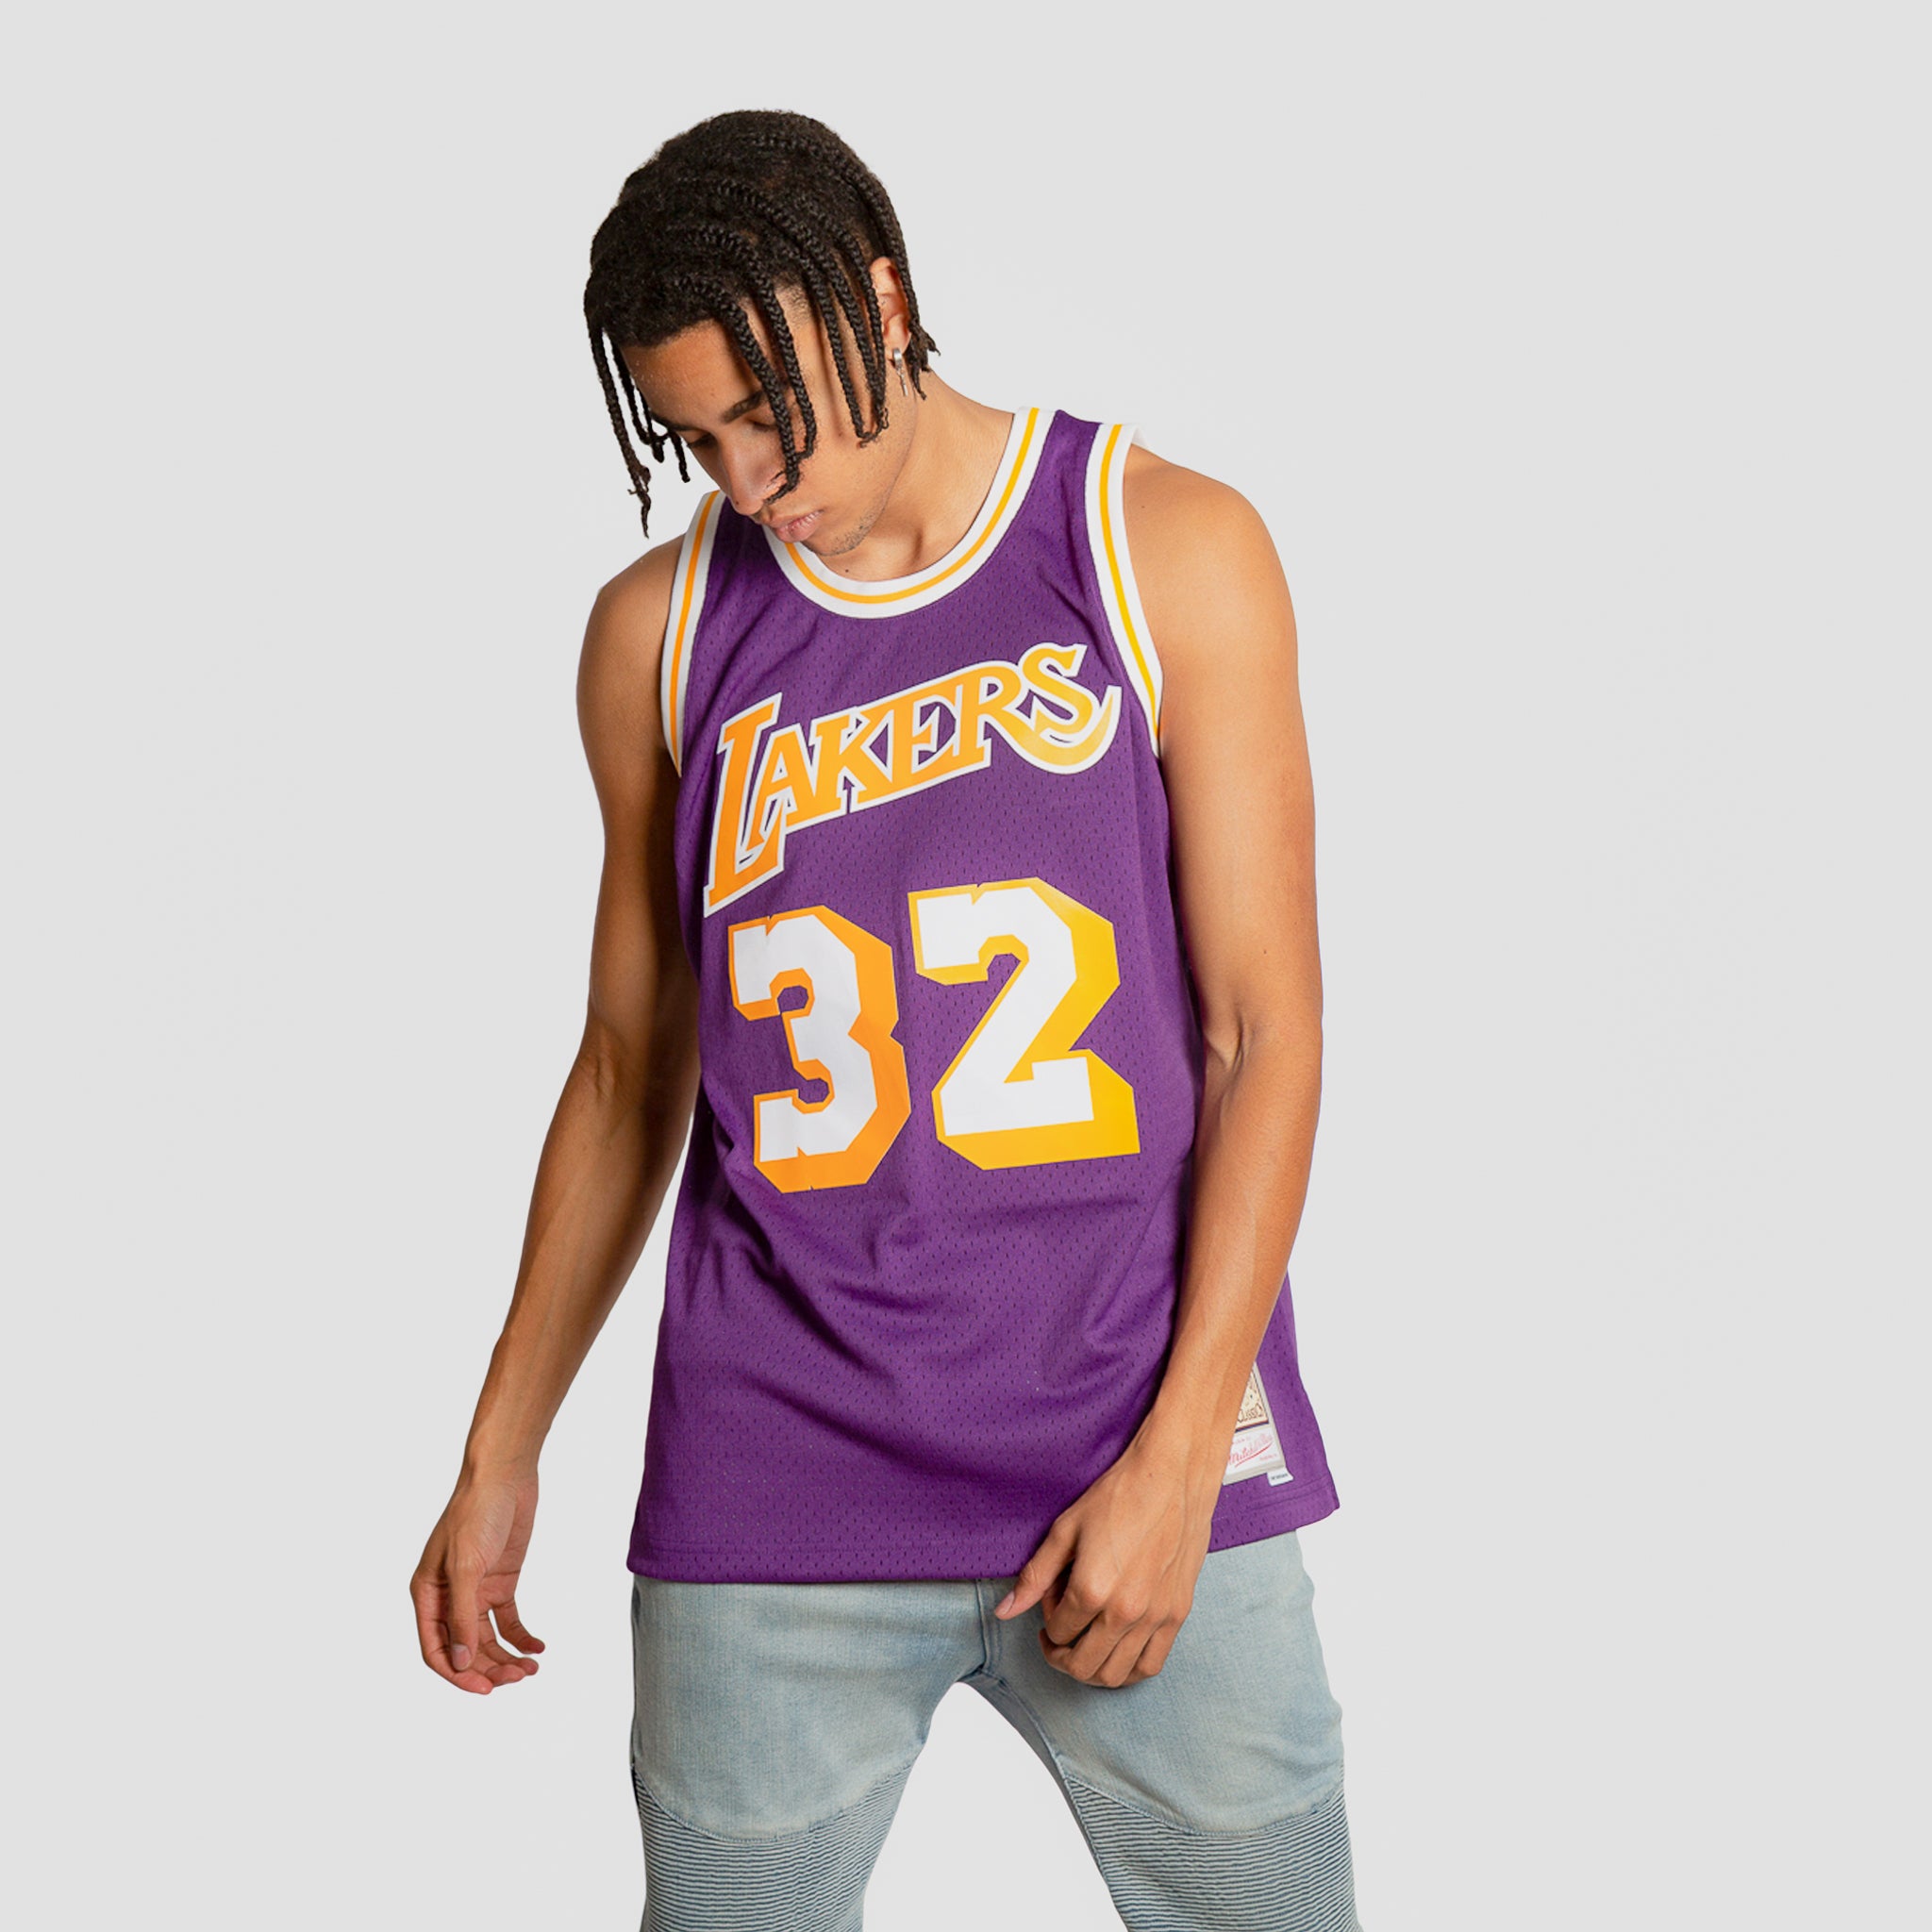 Lakers Jerseys - Shop the Freshest Vintage or Modern LA Lakers